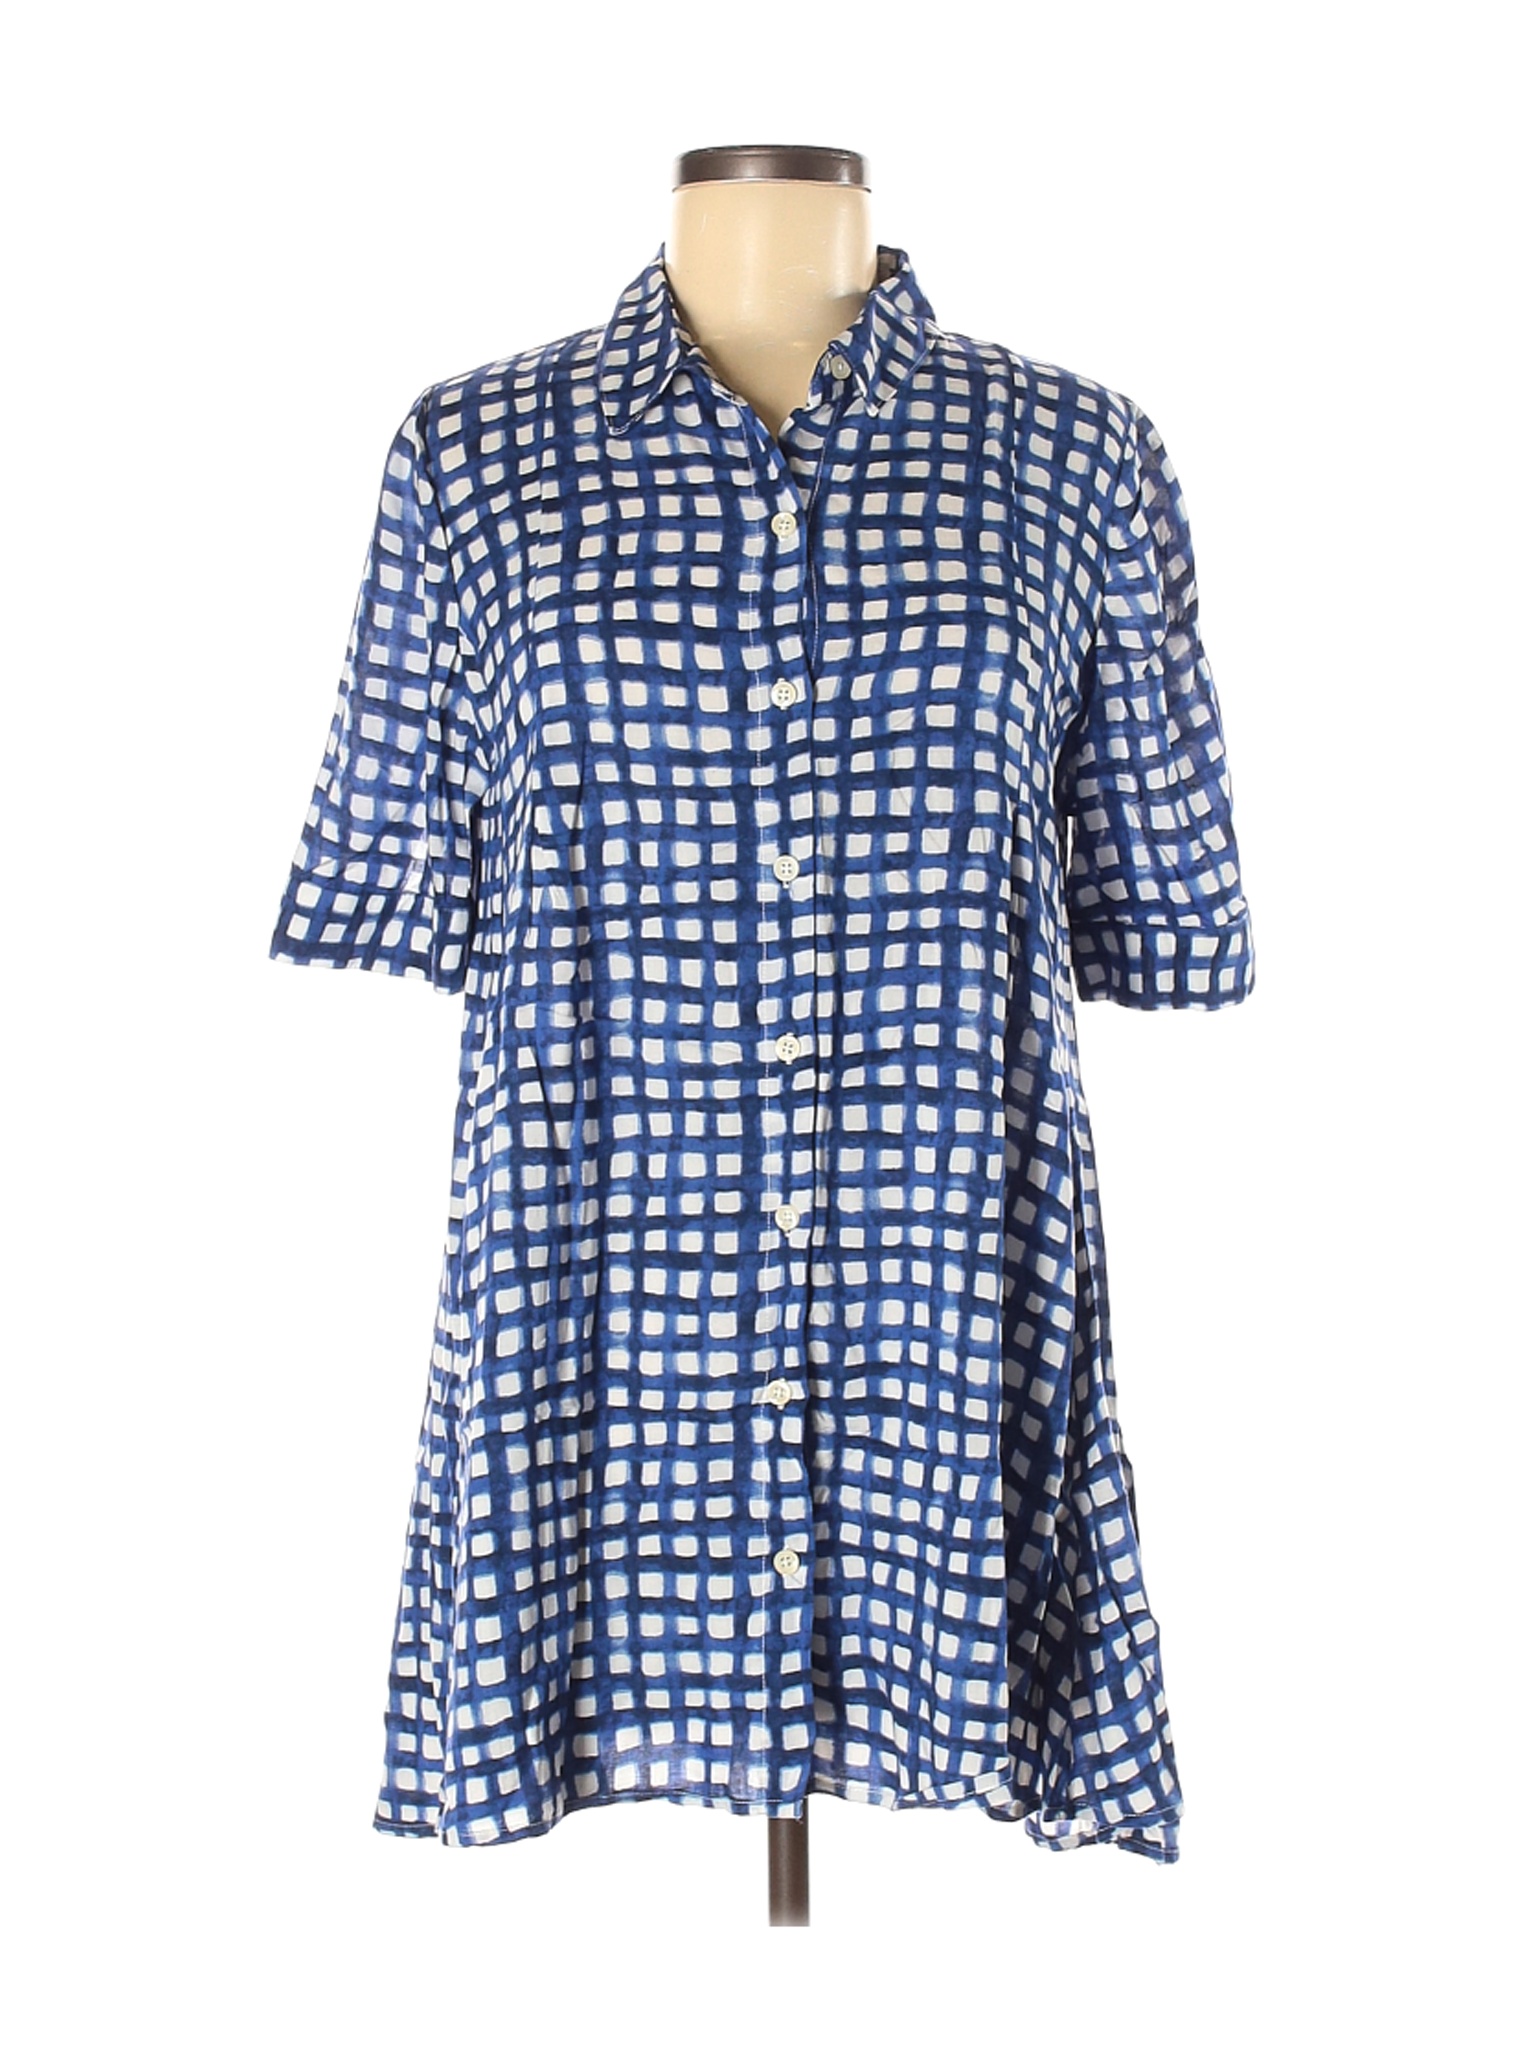 11.1. Tylho Women Blue Short Sleeve Blouse M | eBay